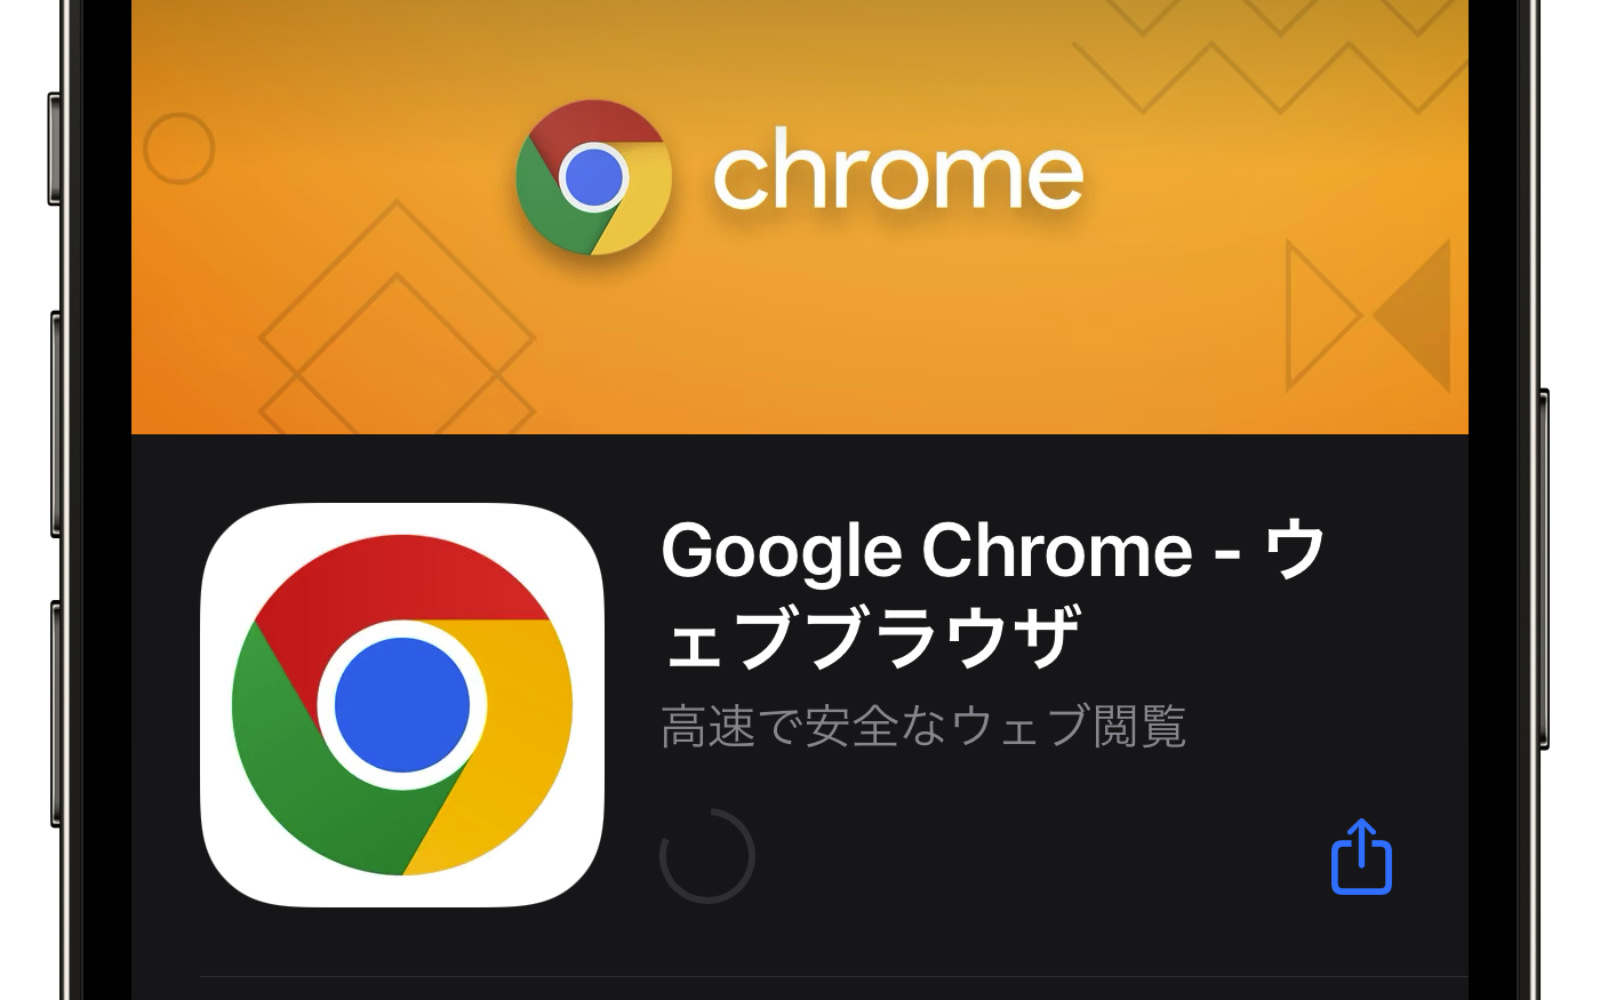 New icons for google chrome 100 ios